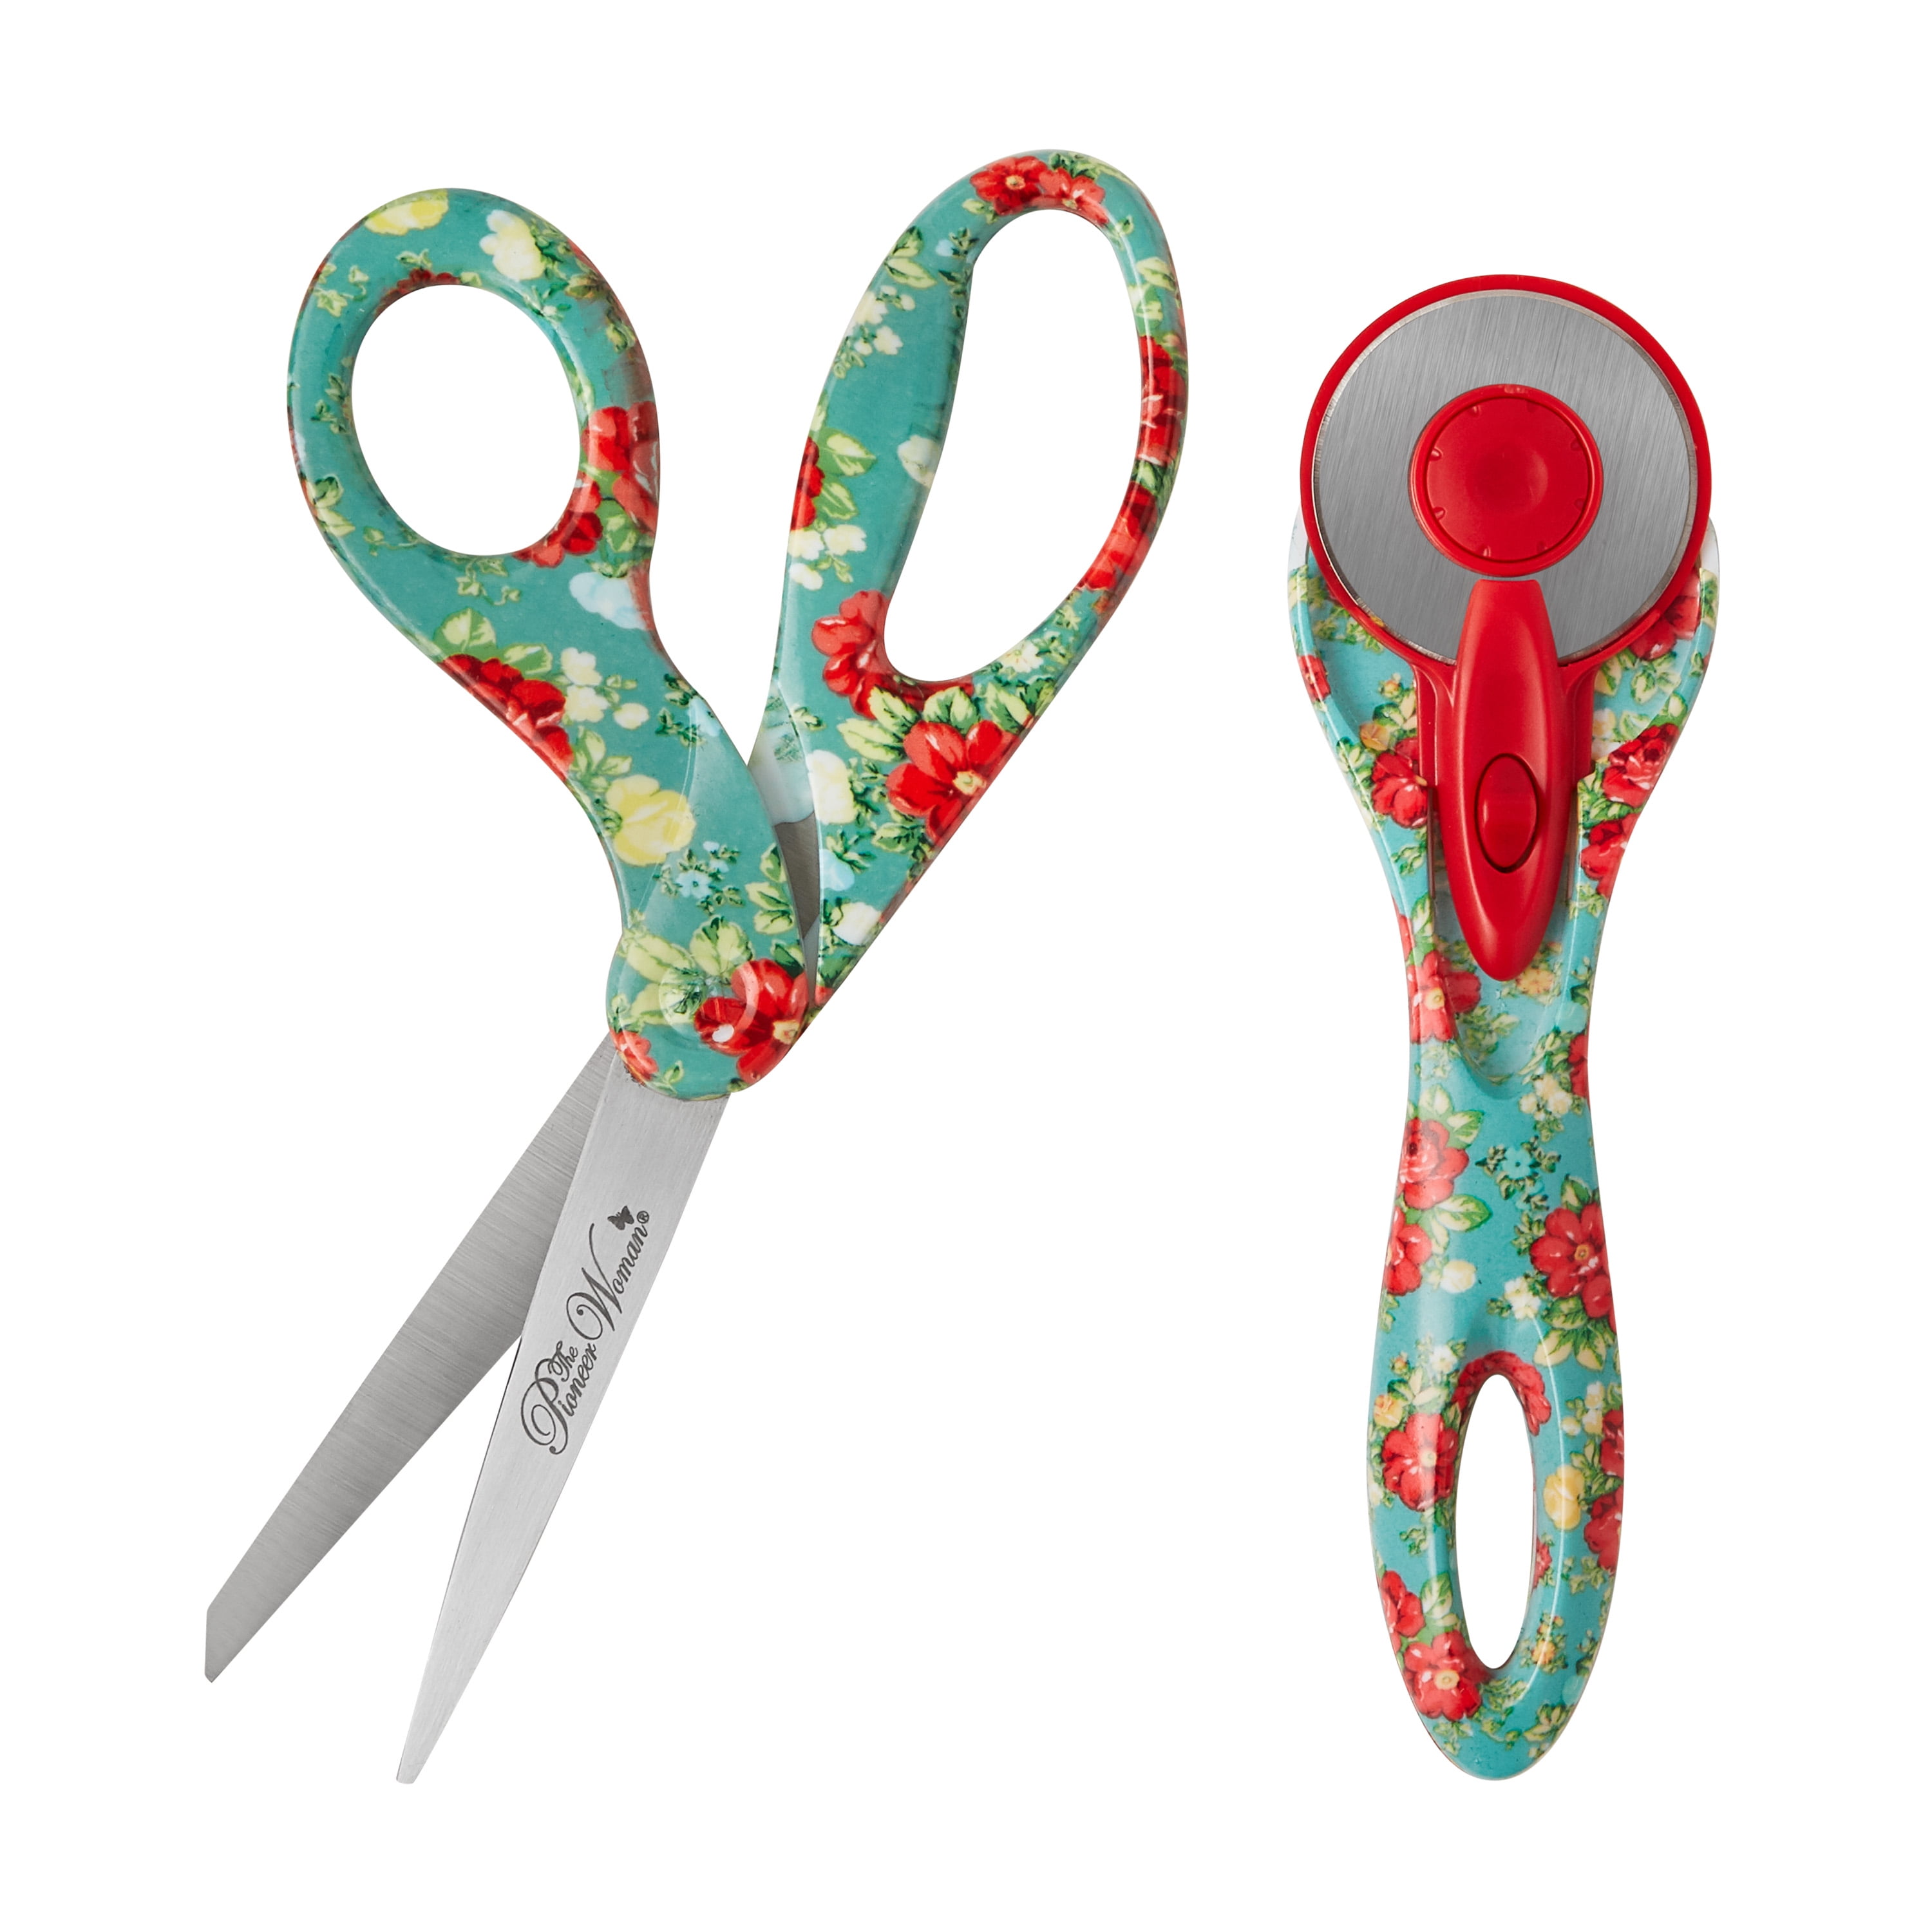 Vintage Scissors with Floral Design – Artiful Boutique